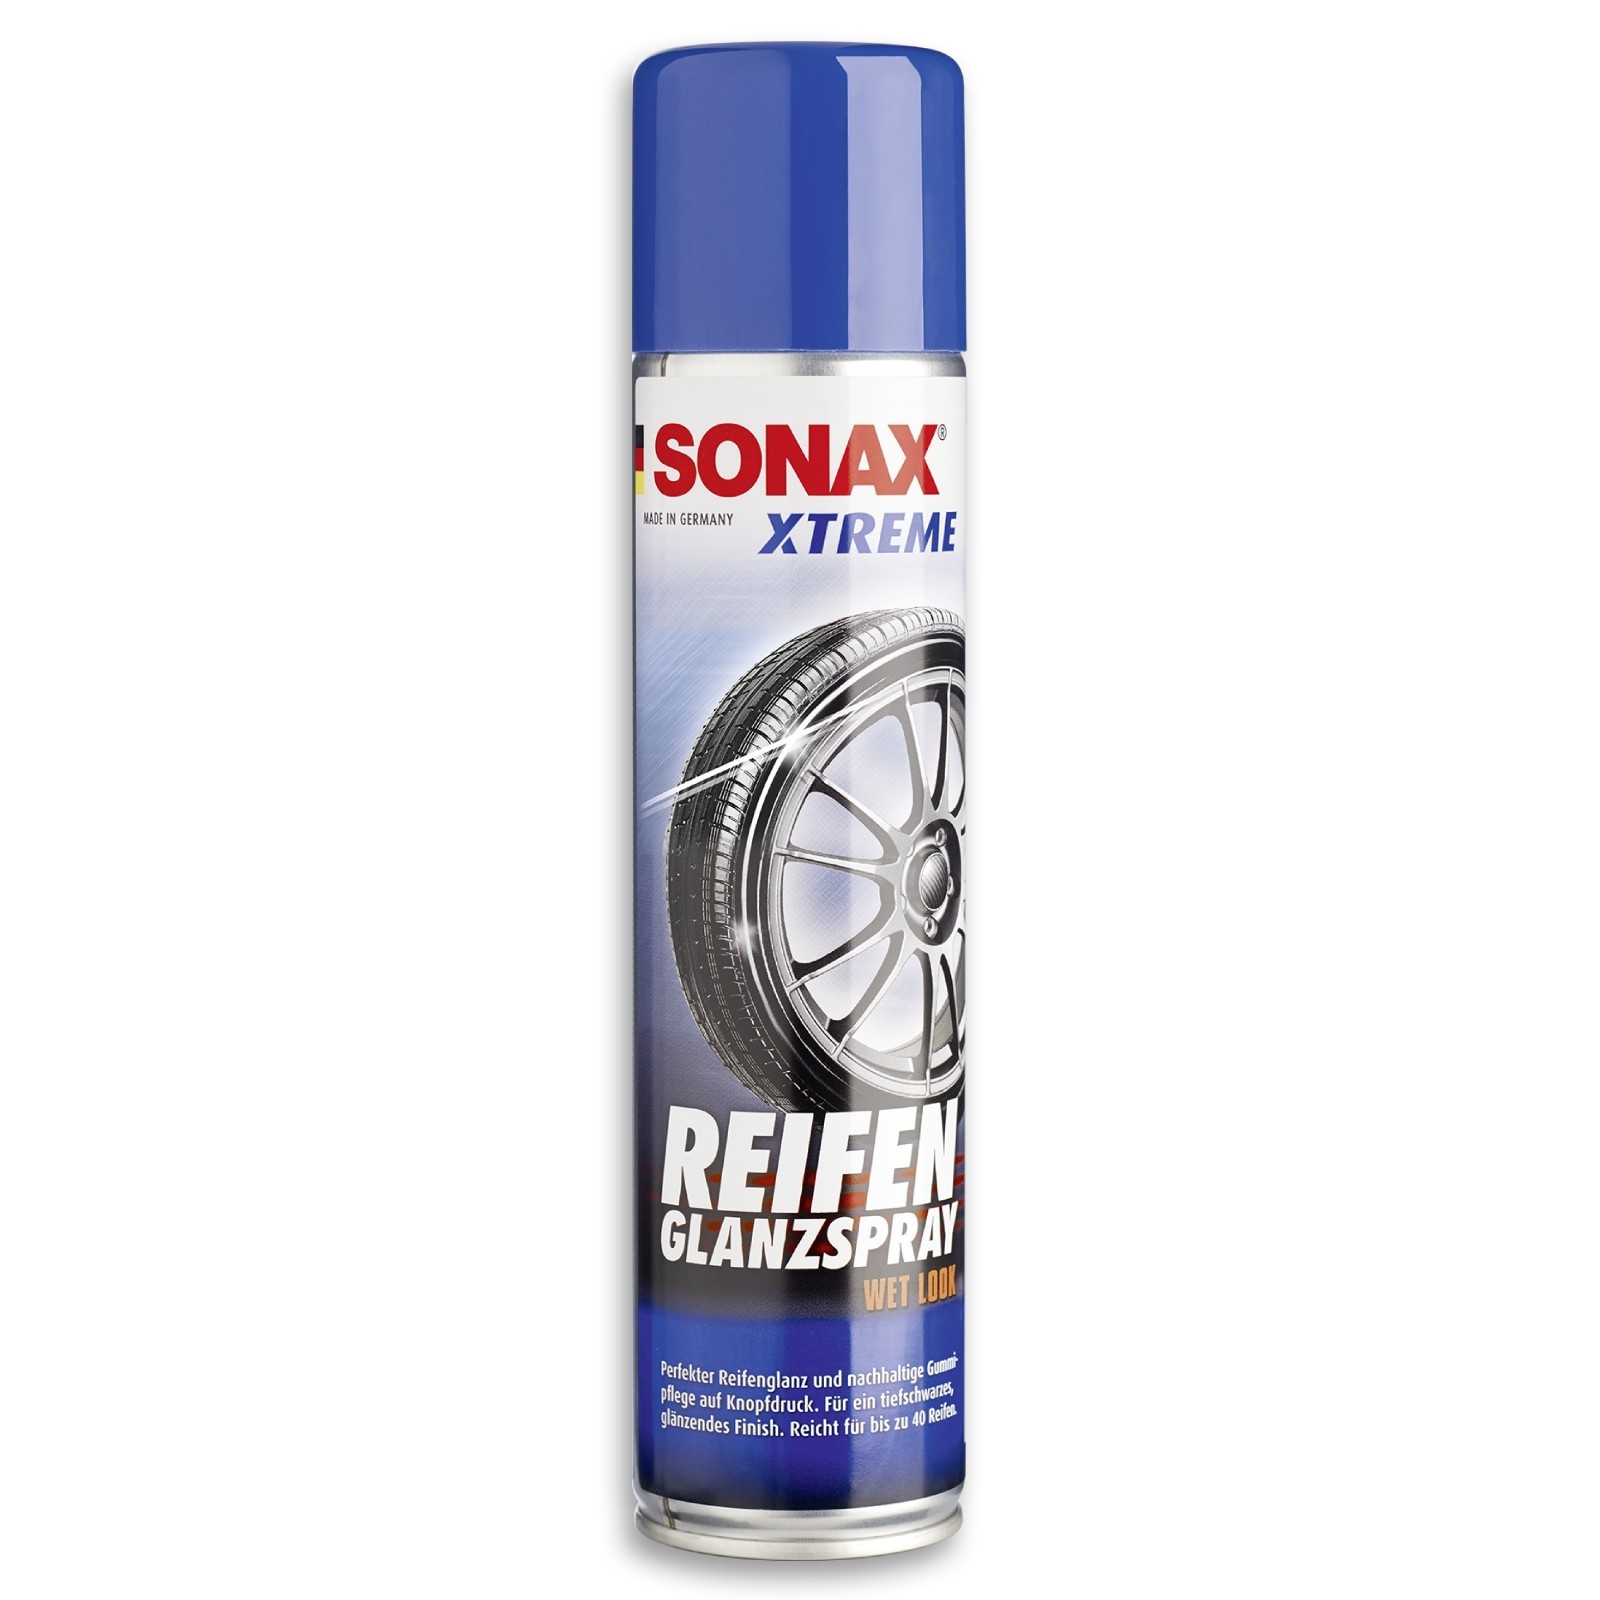 SONAX Xtreme ReifenGlanzSpray Wet Look (400 ml), Art.-Nr. 02353000